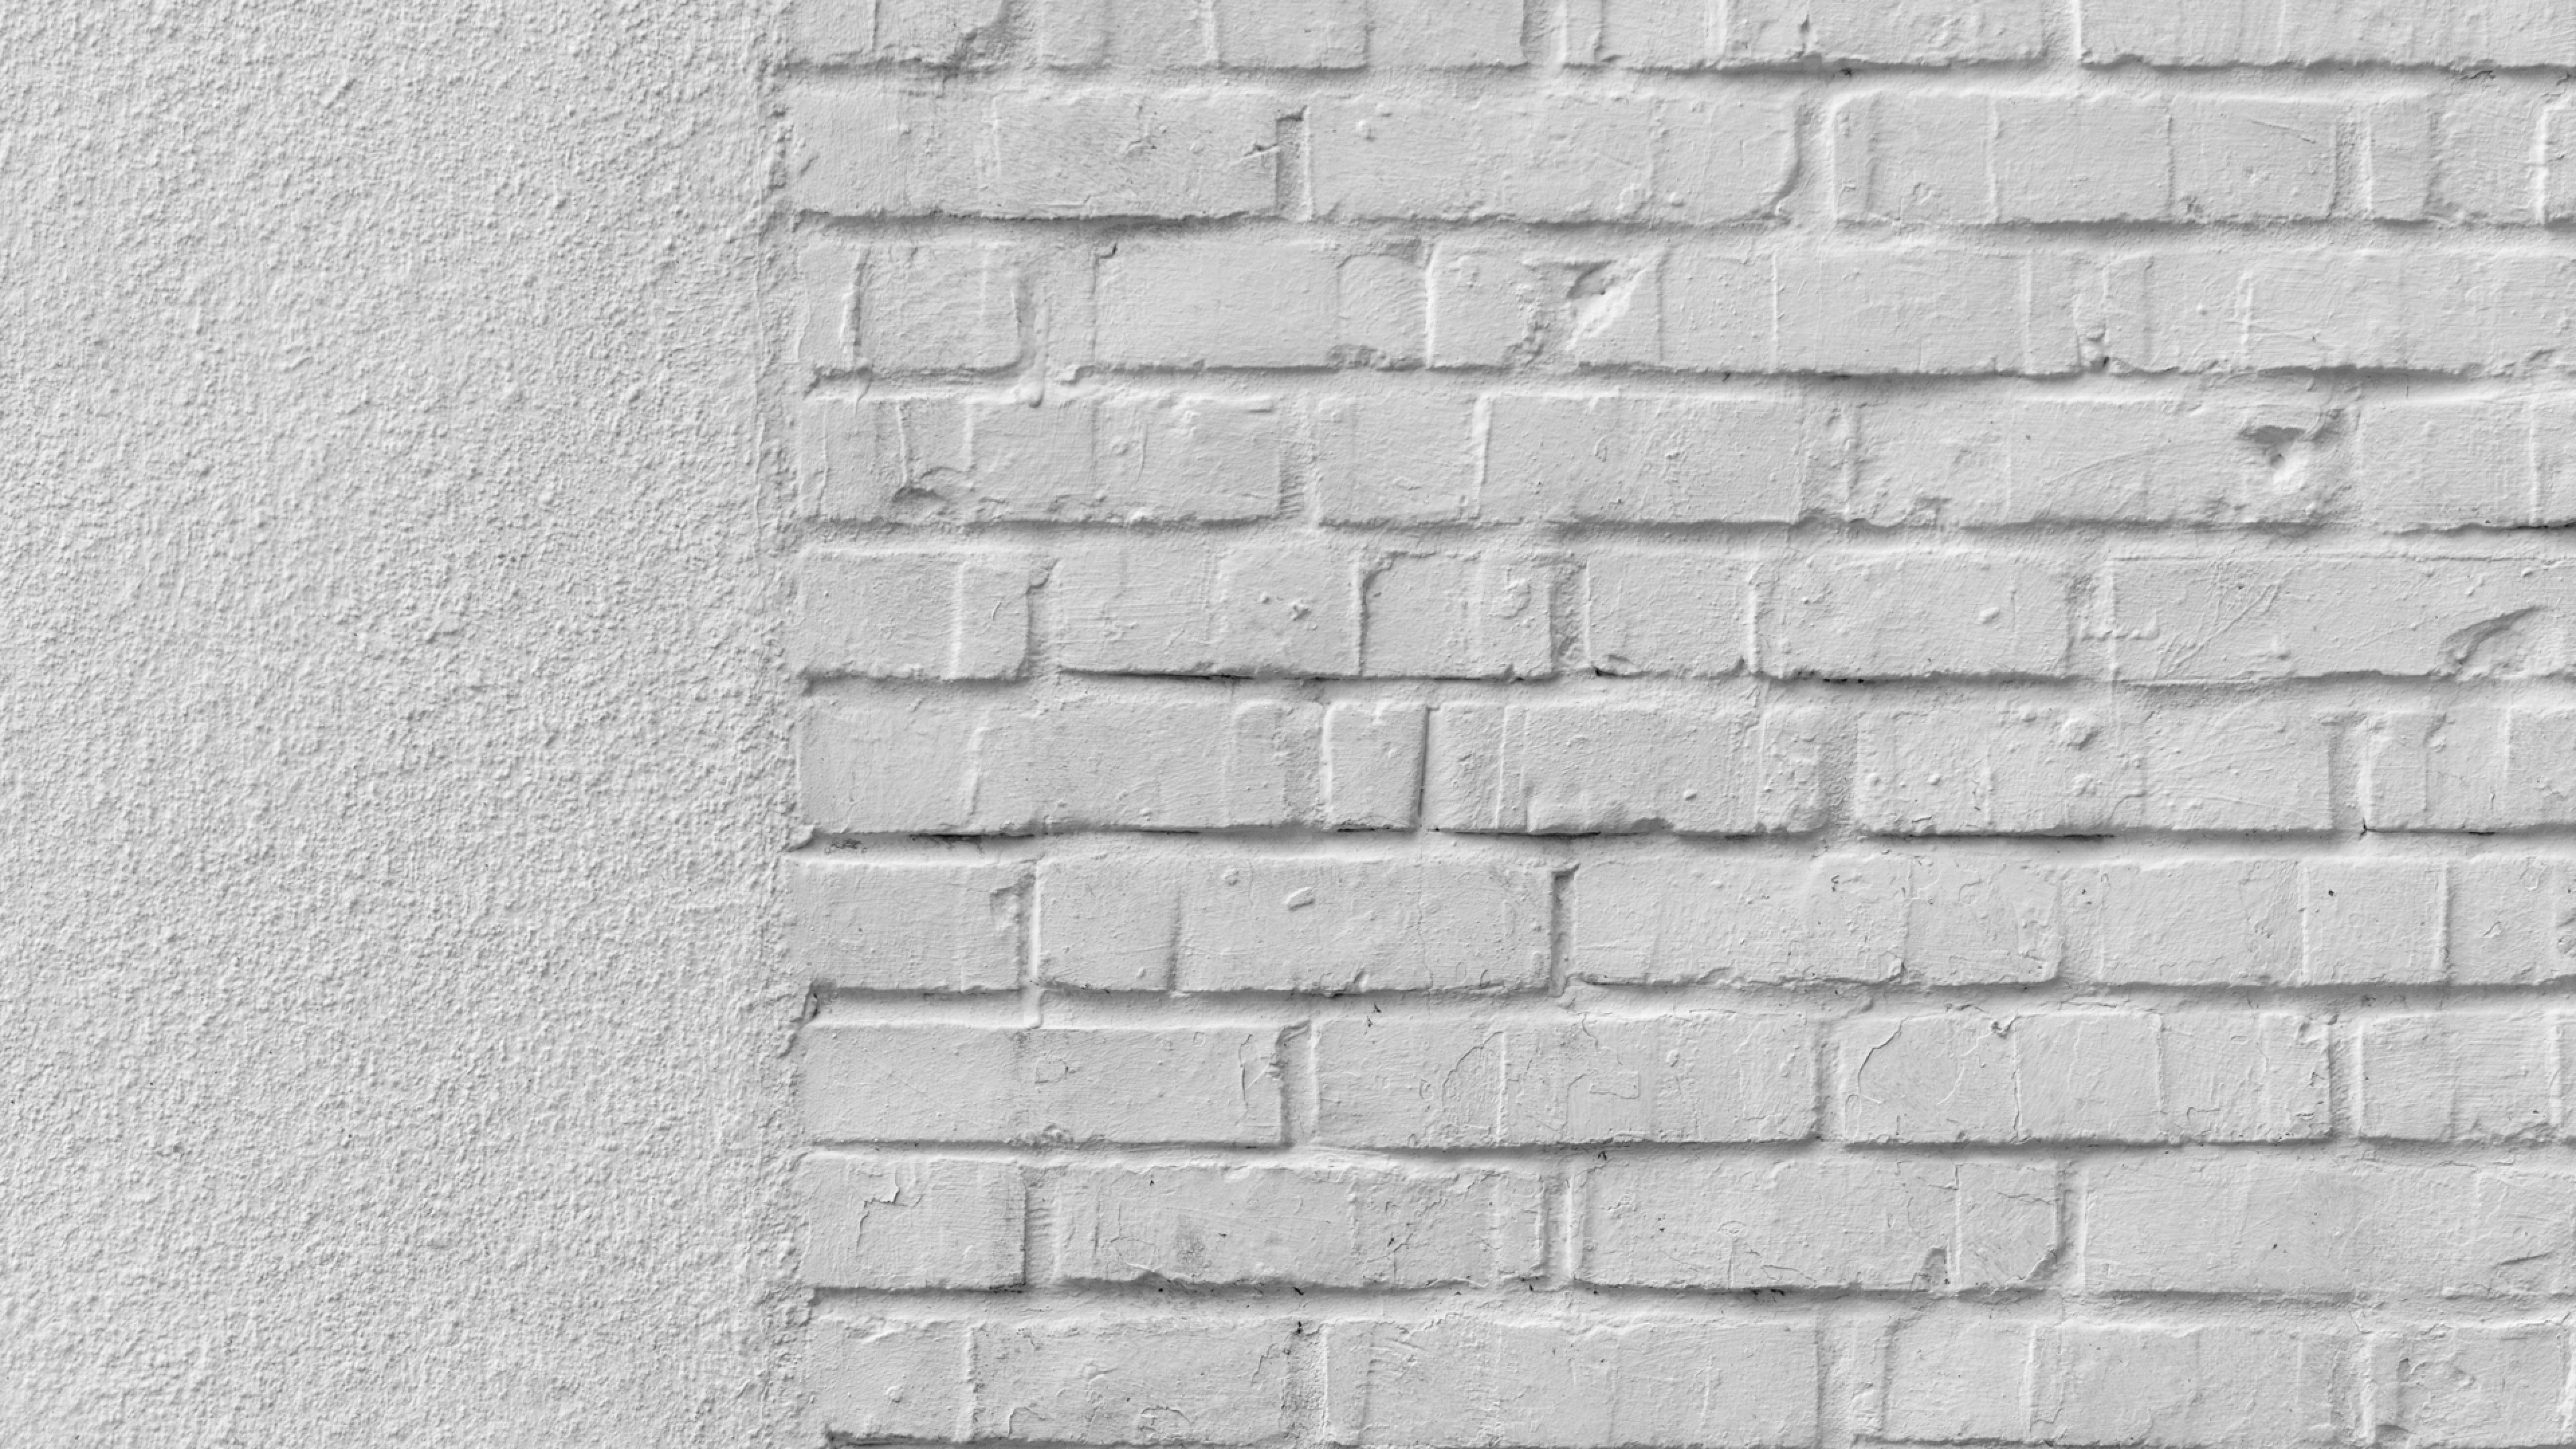 7,500+ Brick Wall Background Stock Videos and Royalty-Free Footage - iStock  | Single brick, Brick wall, Brick texture